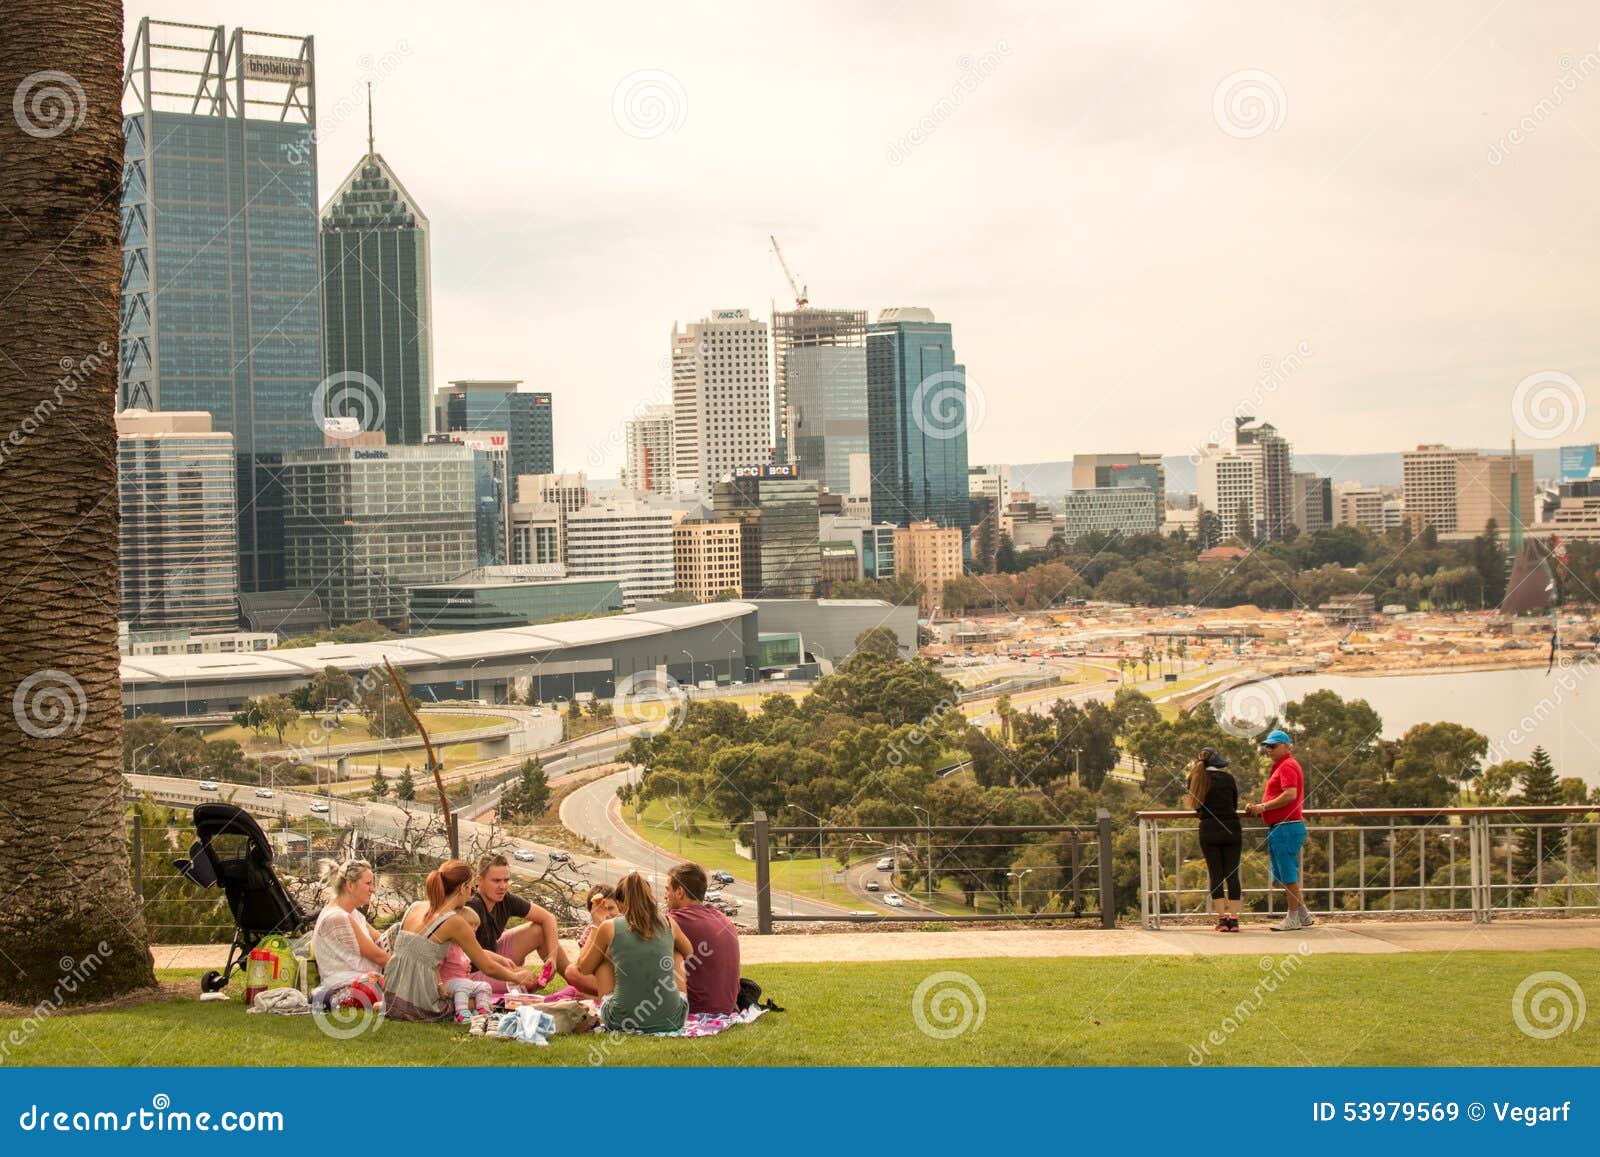 Picnic Perth Skyline Australia Editorial Stock Image - Image of city